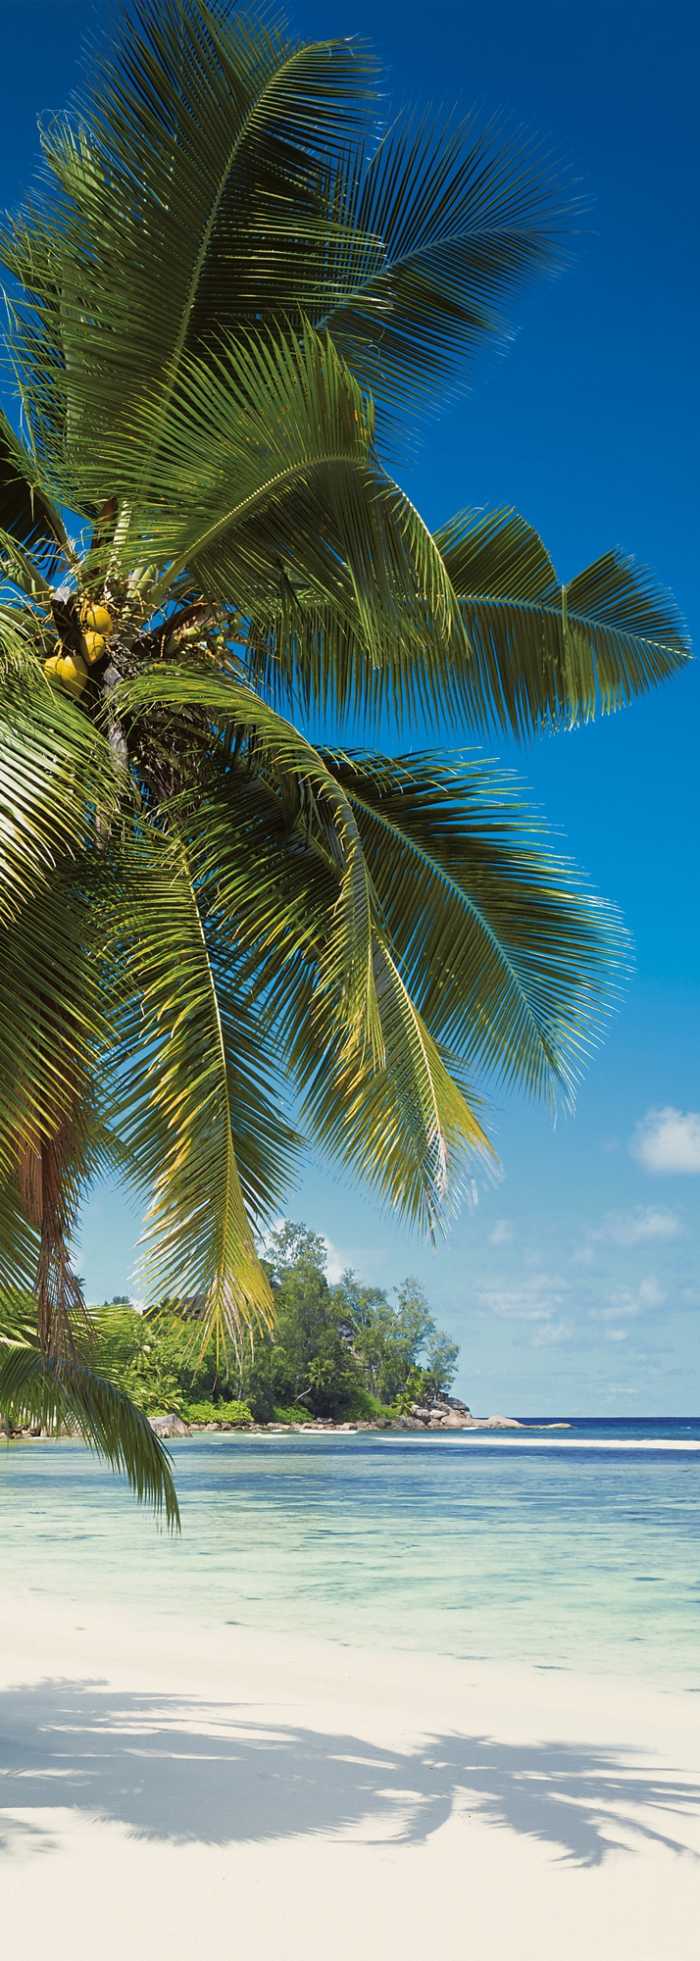 Panel Coconut Bay